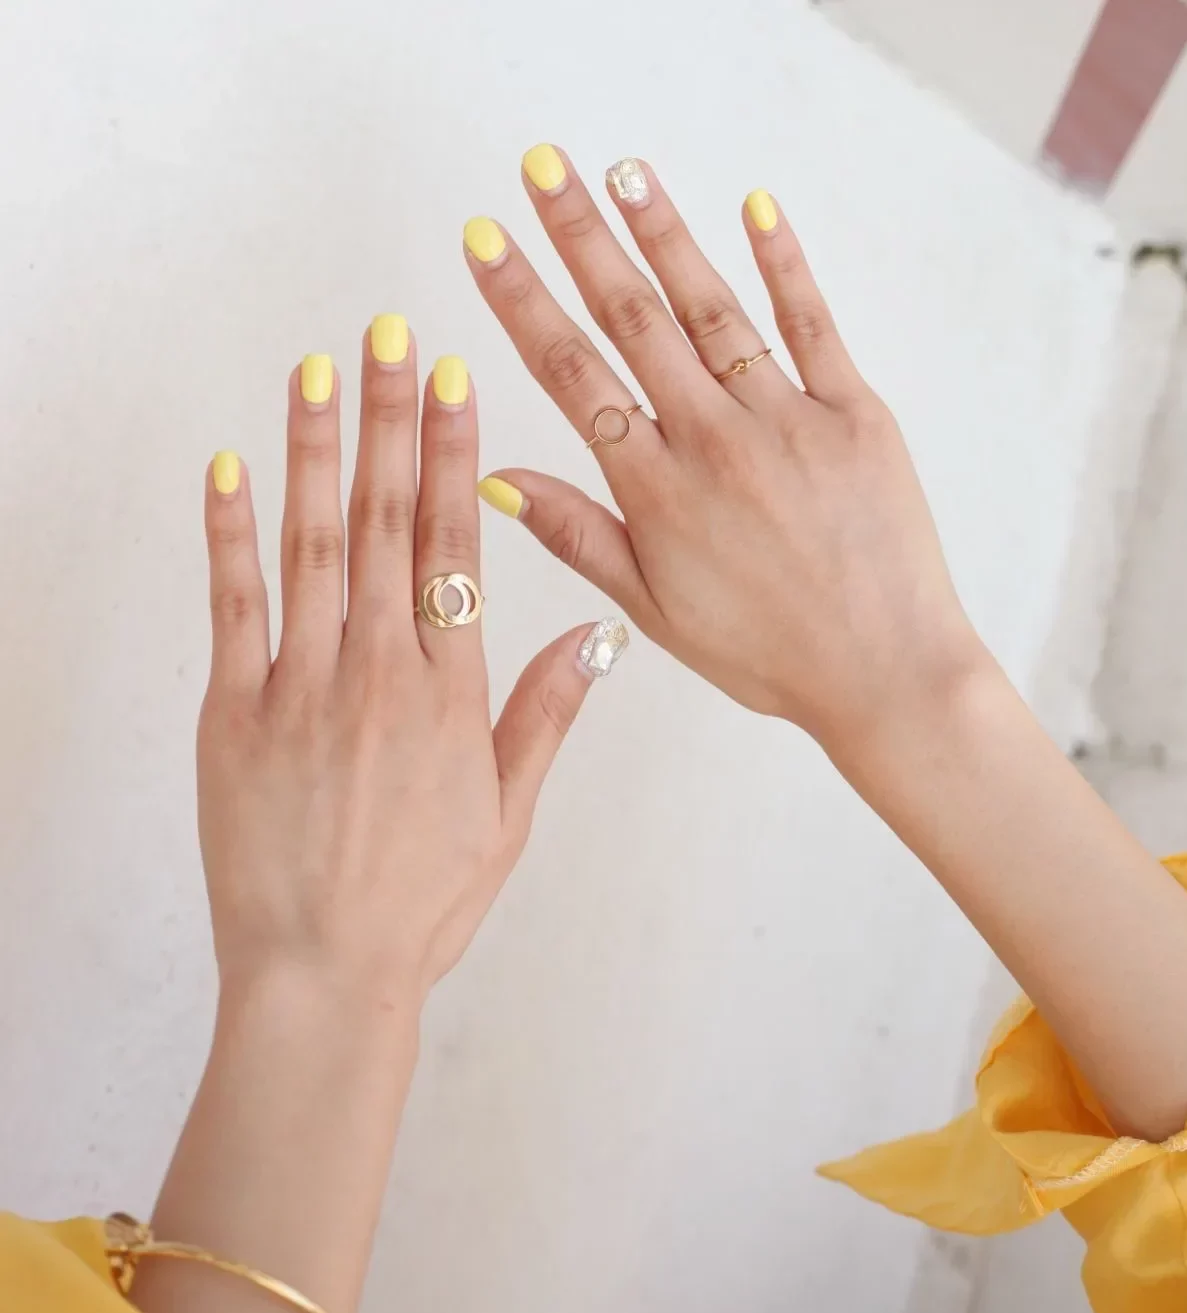 tendance couleur vernis ongles jaune pale comment colorer ses ongles